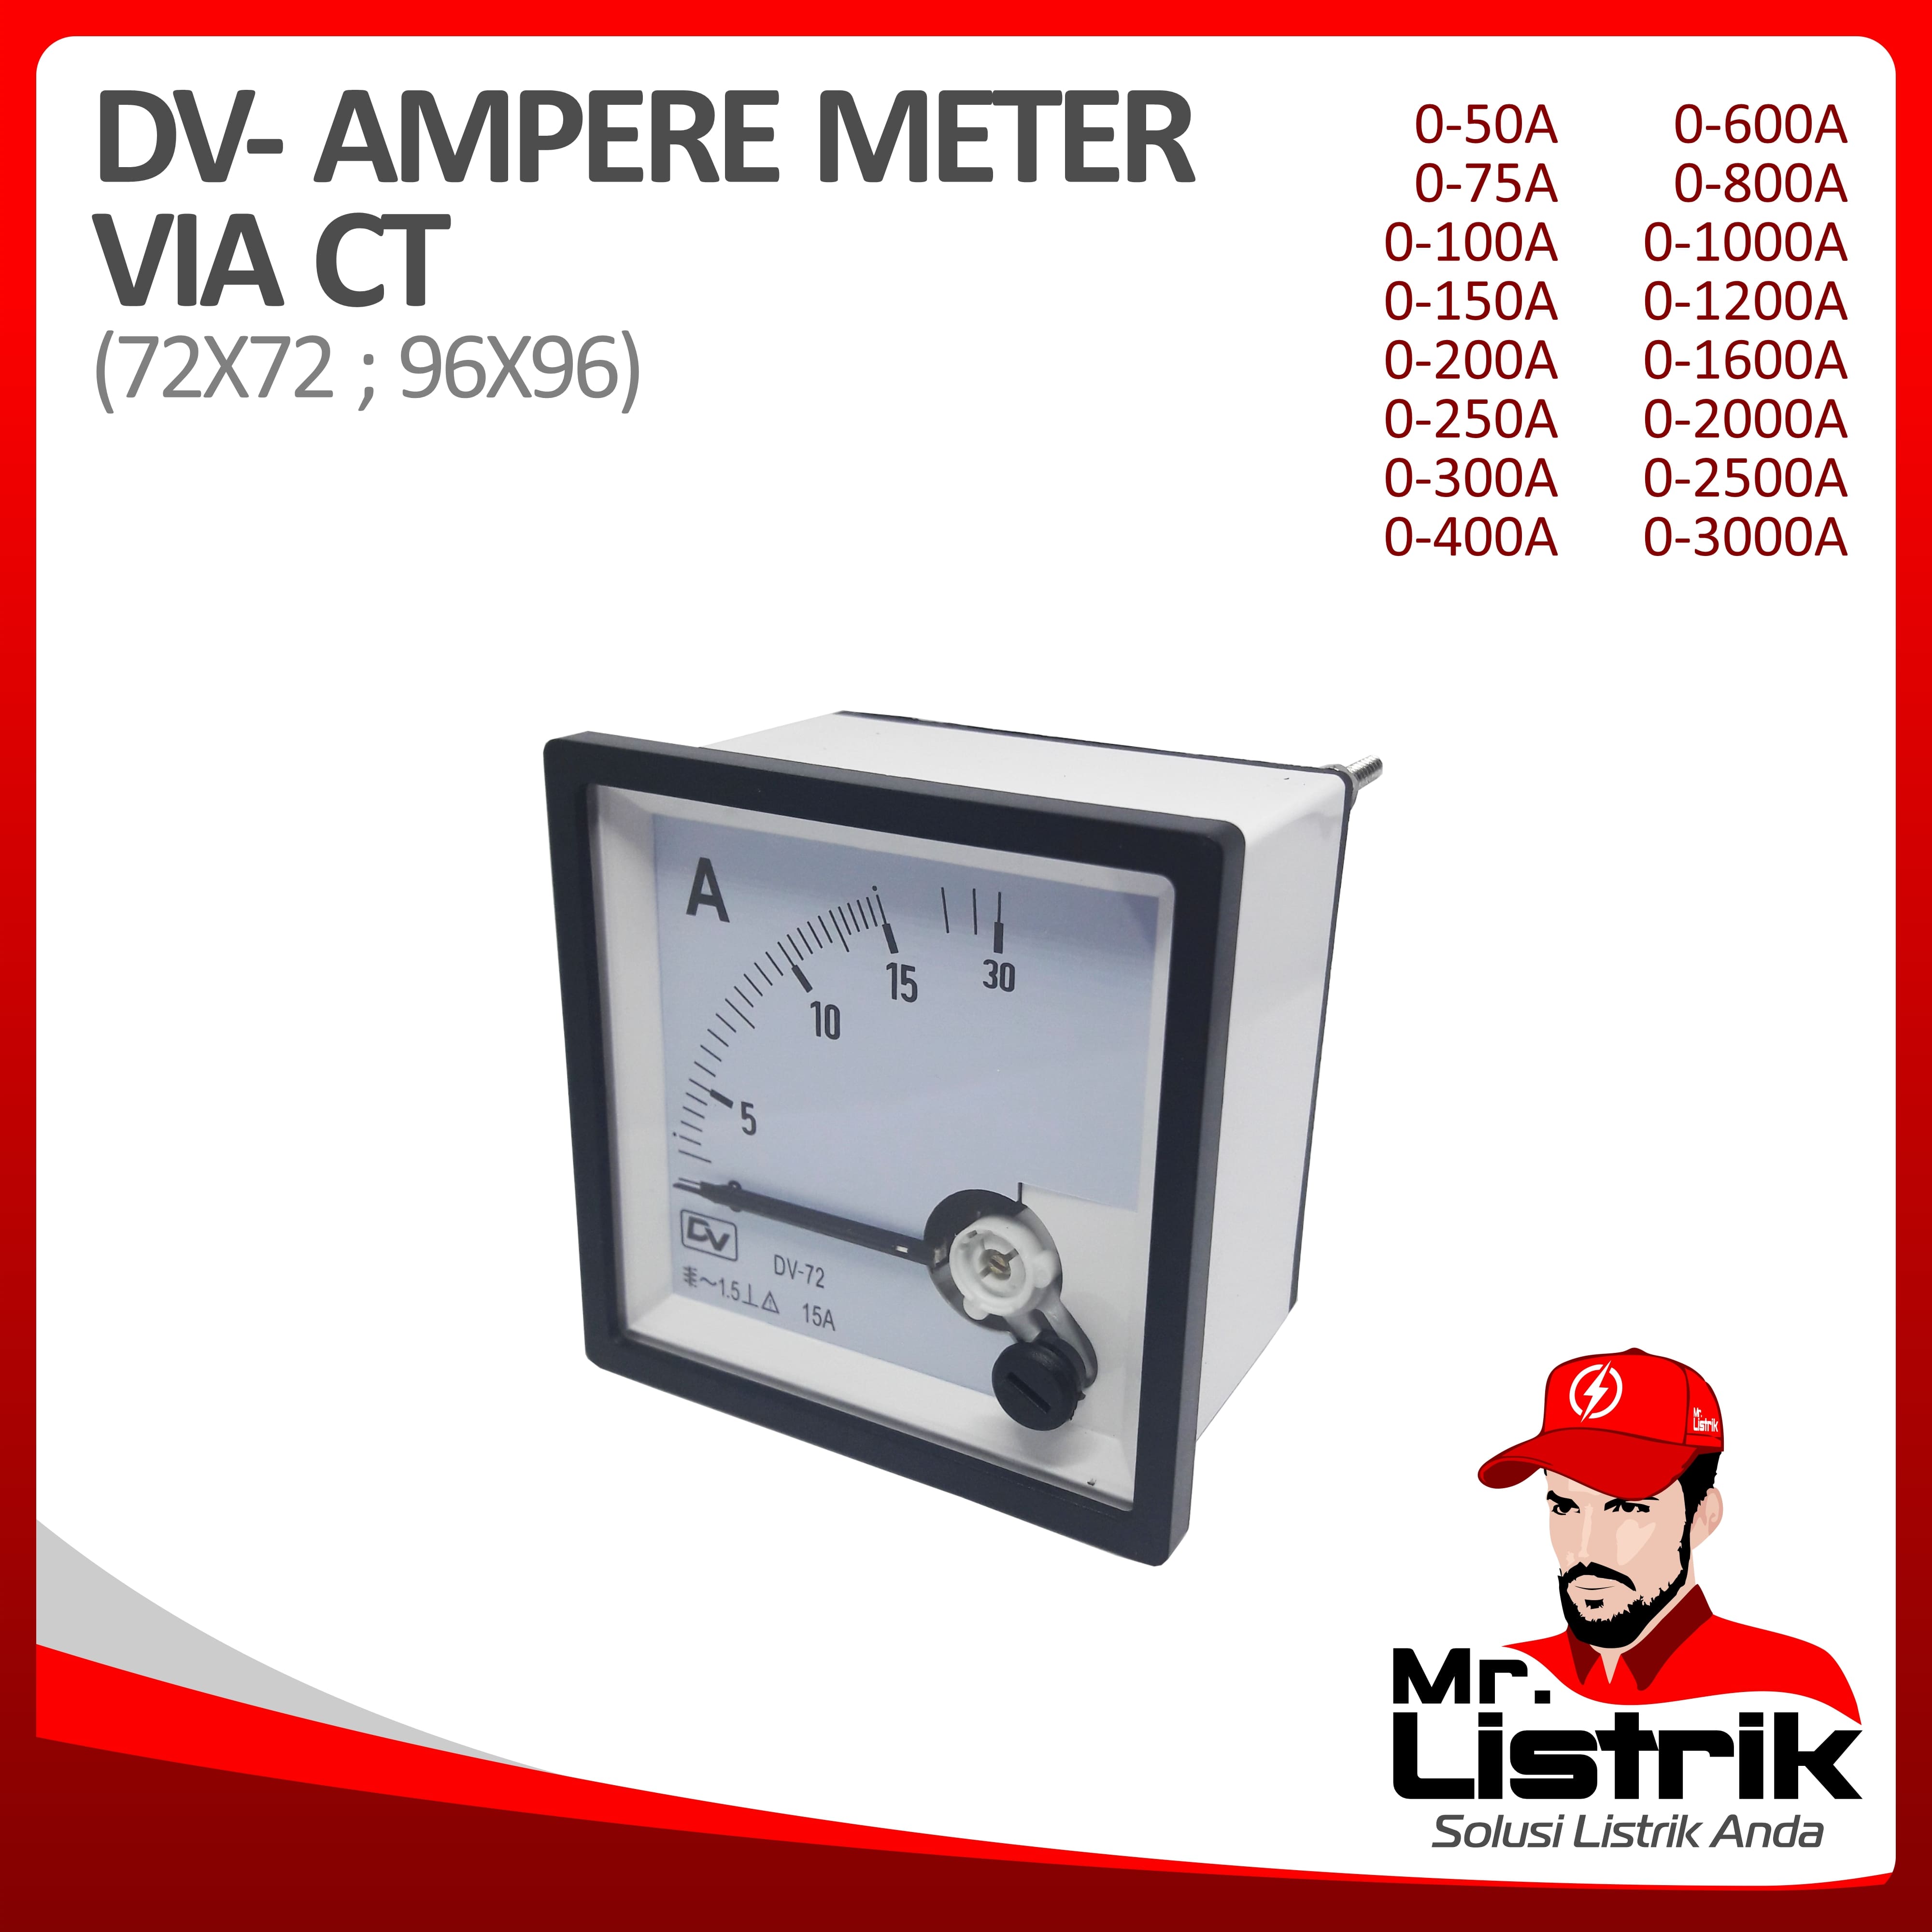 Amperemeter Via CT DV 96x96 - 1200A